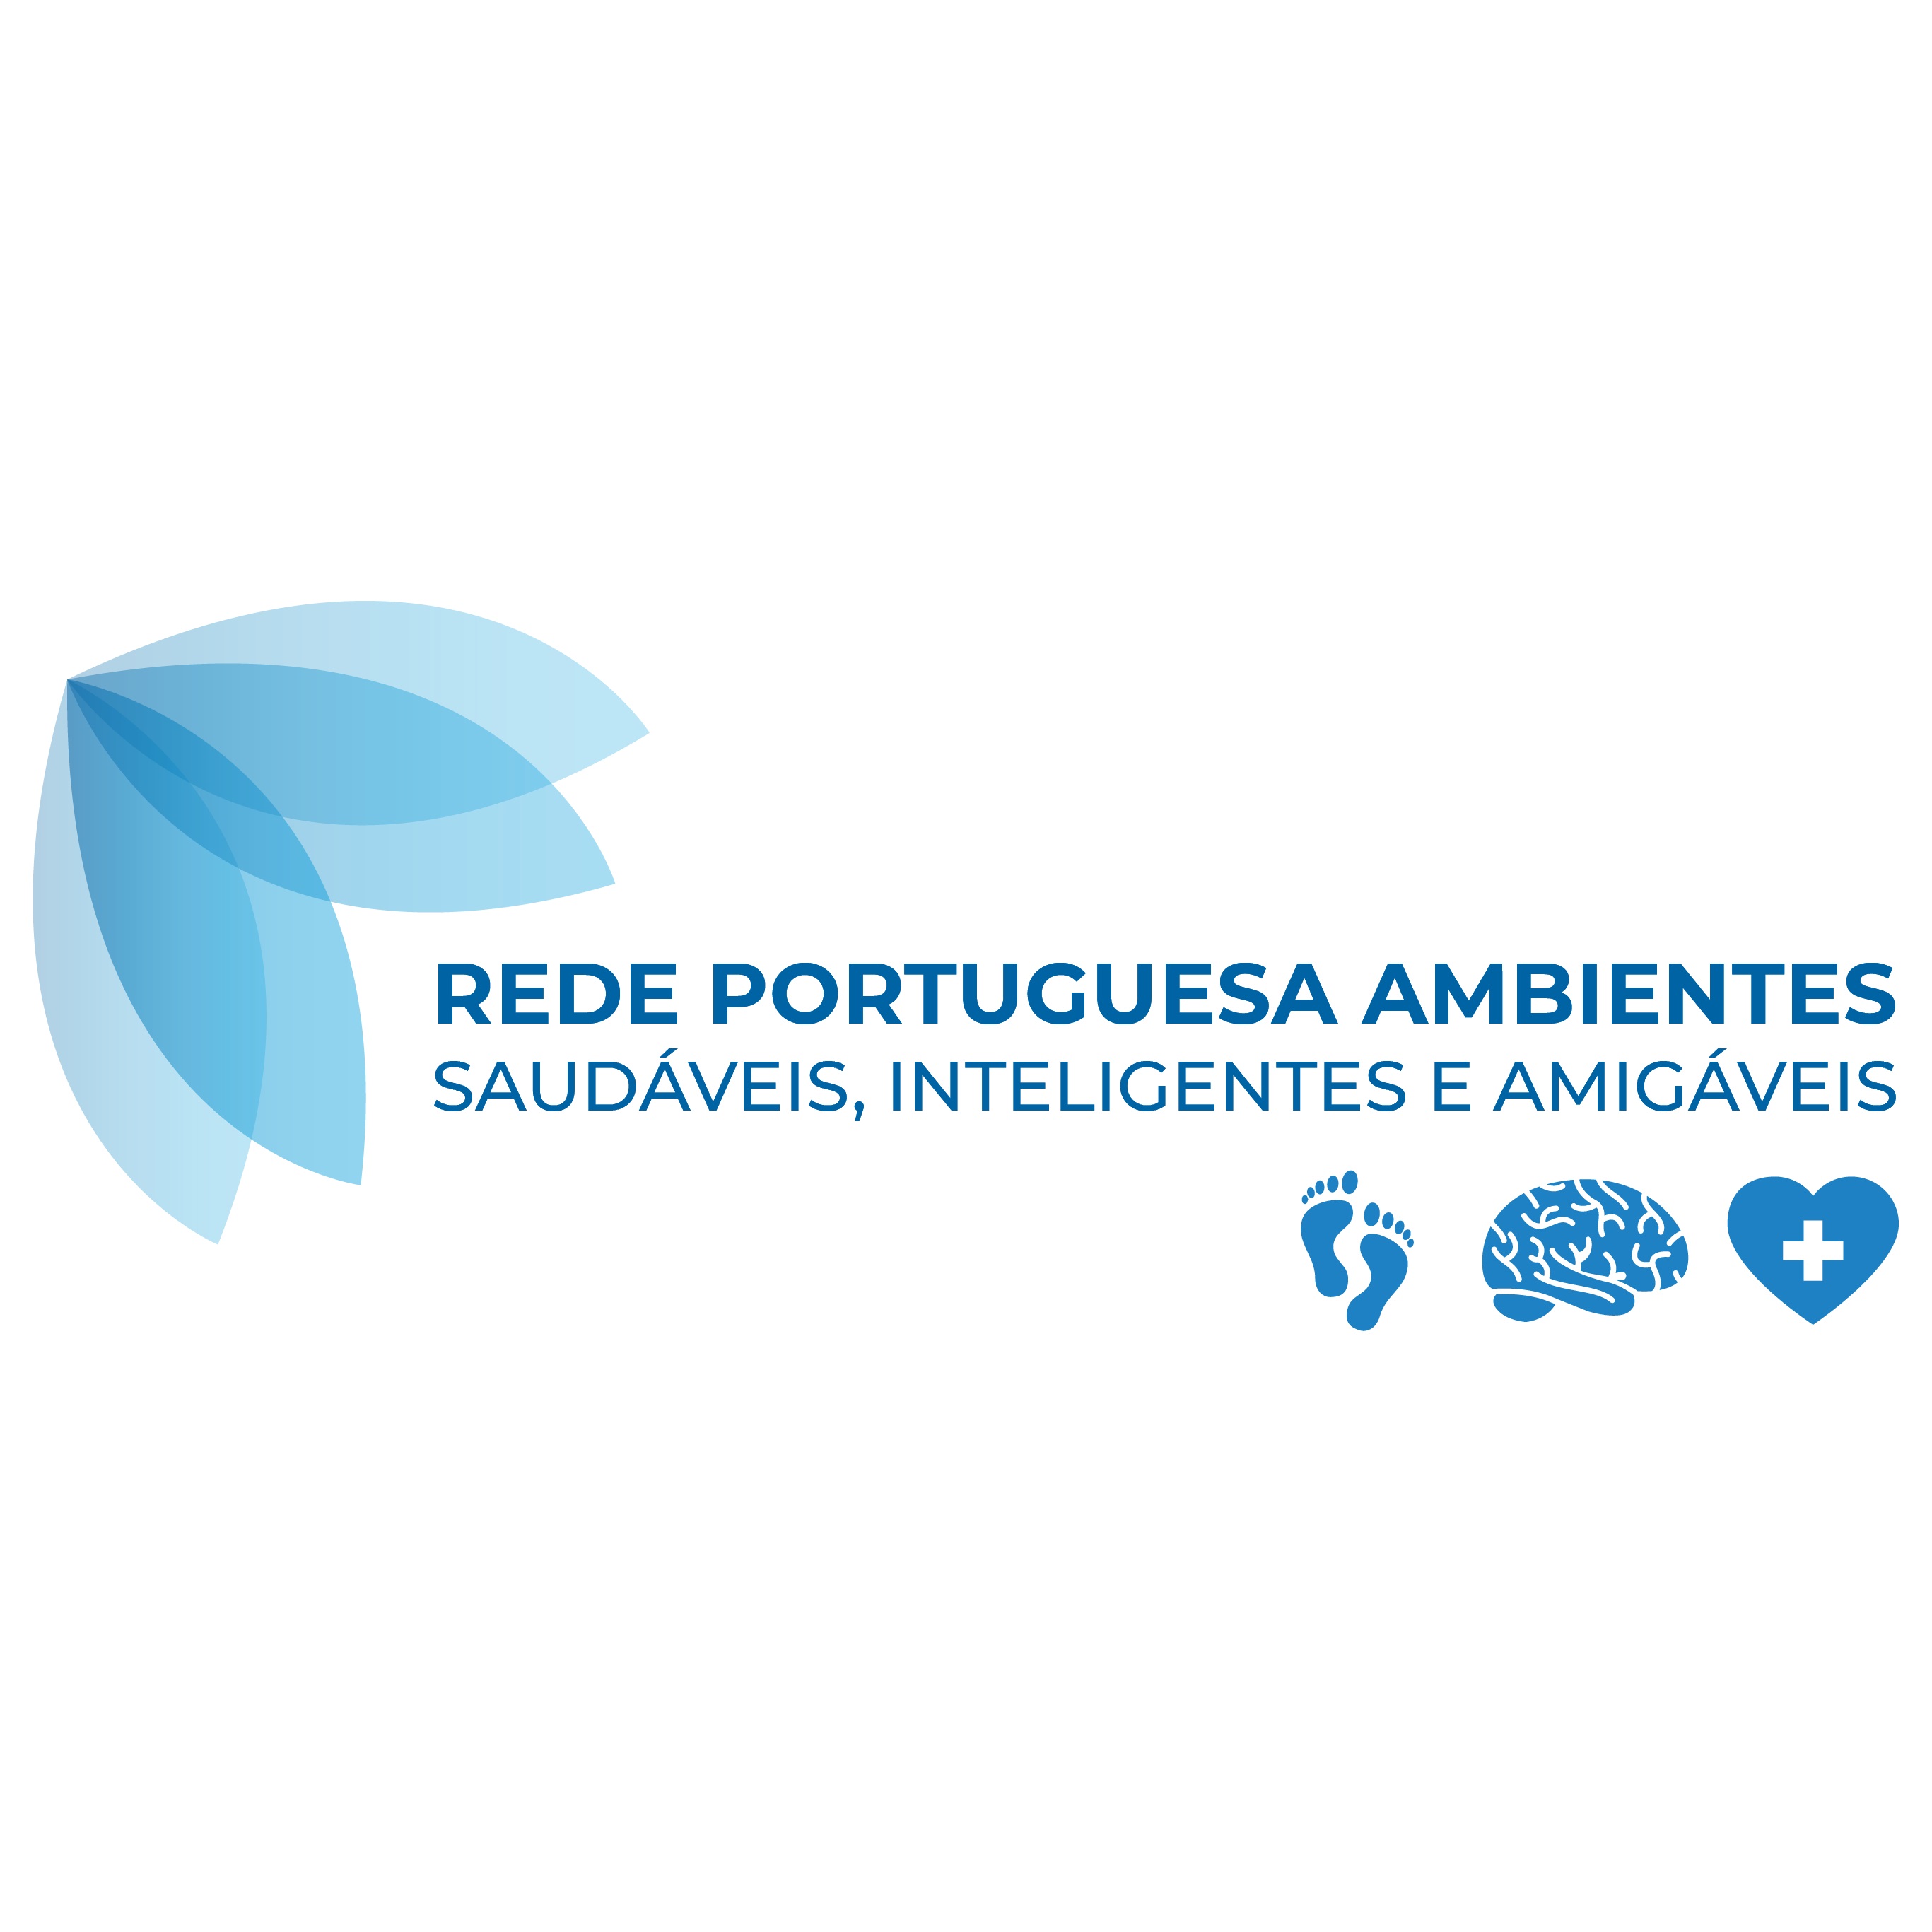 https://www.caritascoimbra.pt/rede-portuguesa/pagina-inicial/